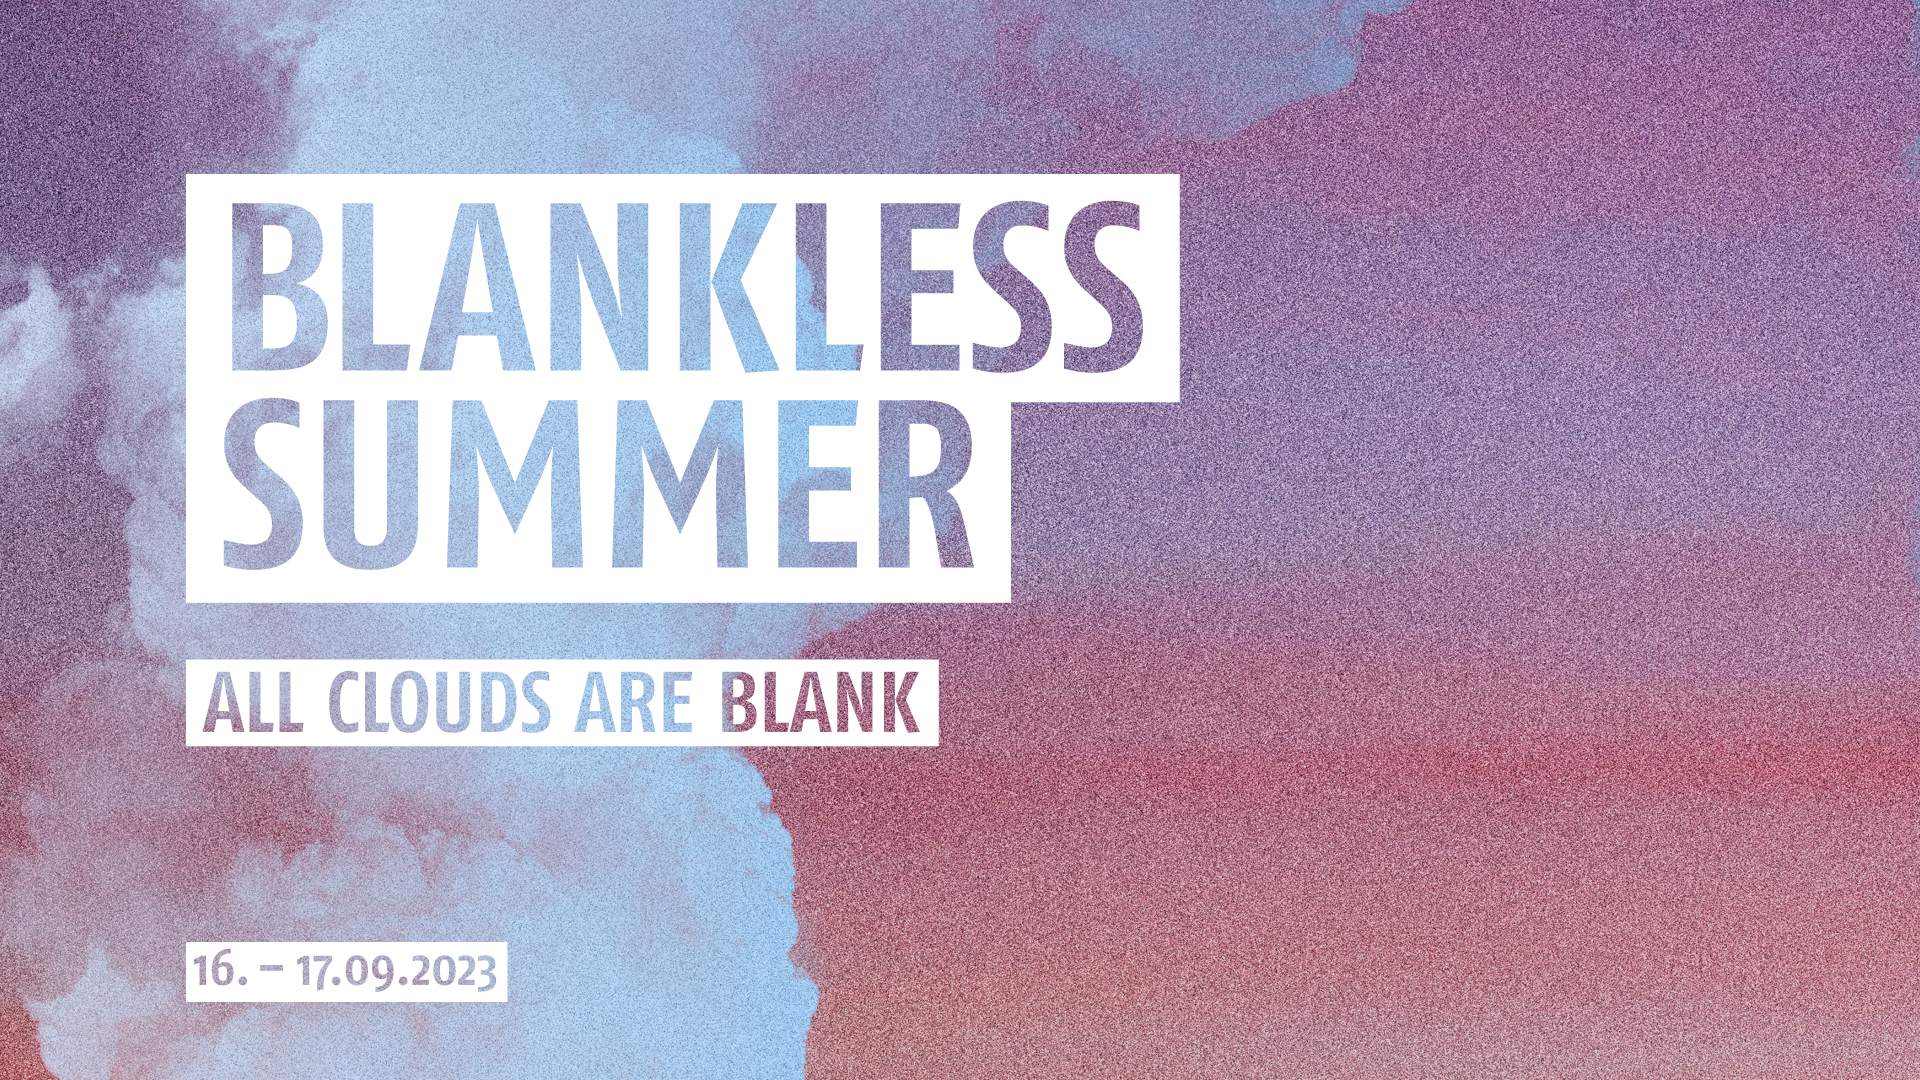 BLANKLESS SUMMER - フライヤー表